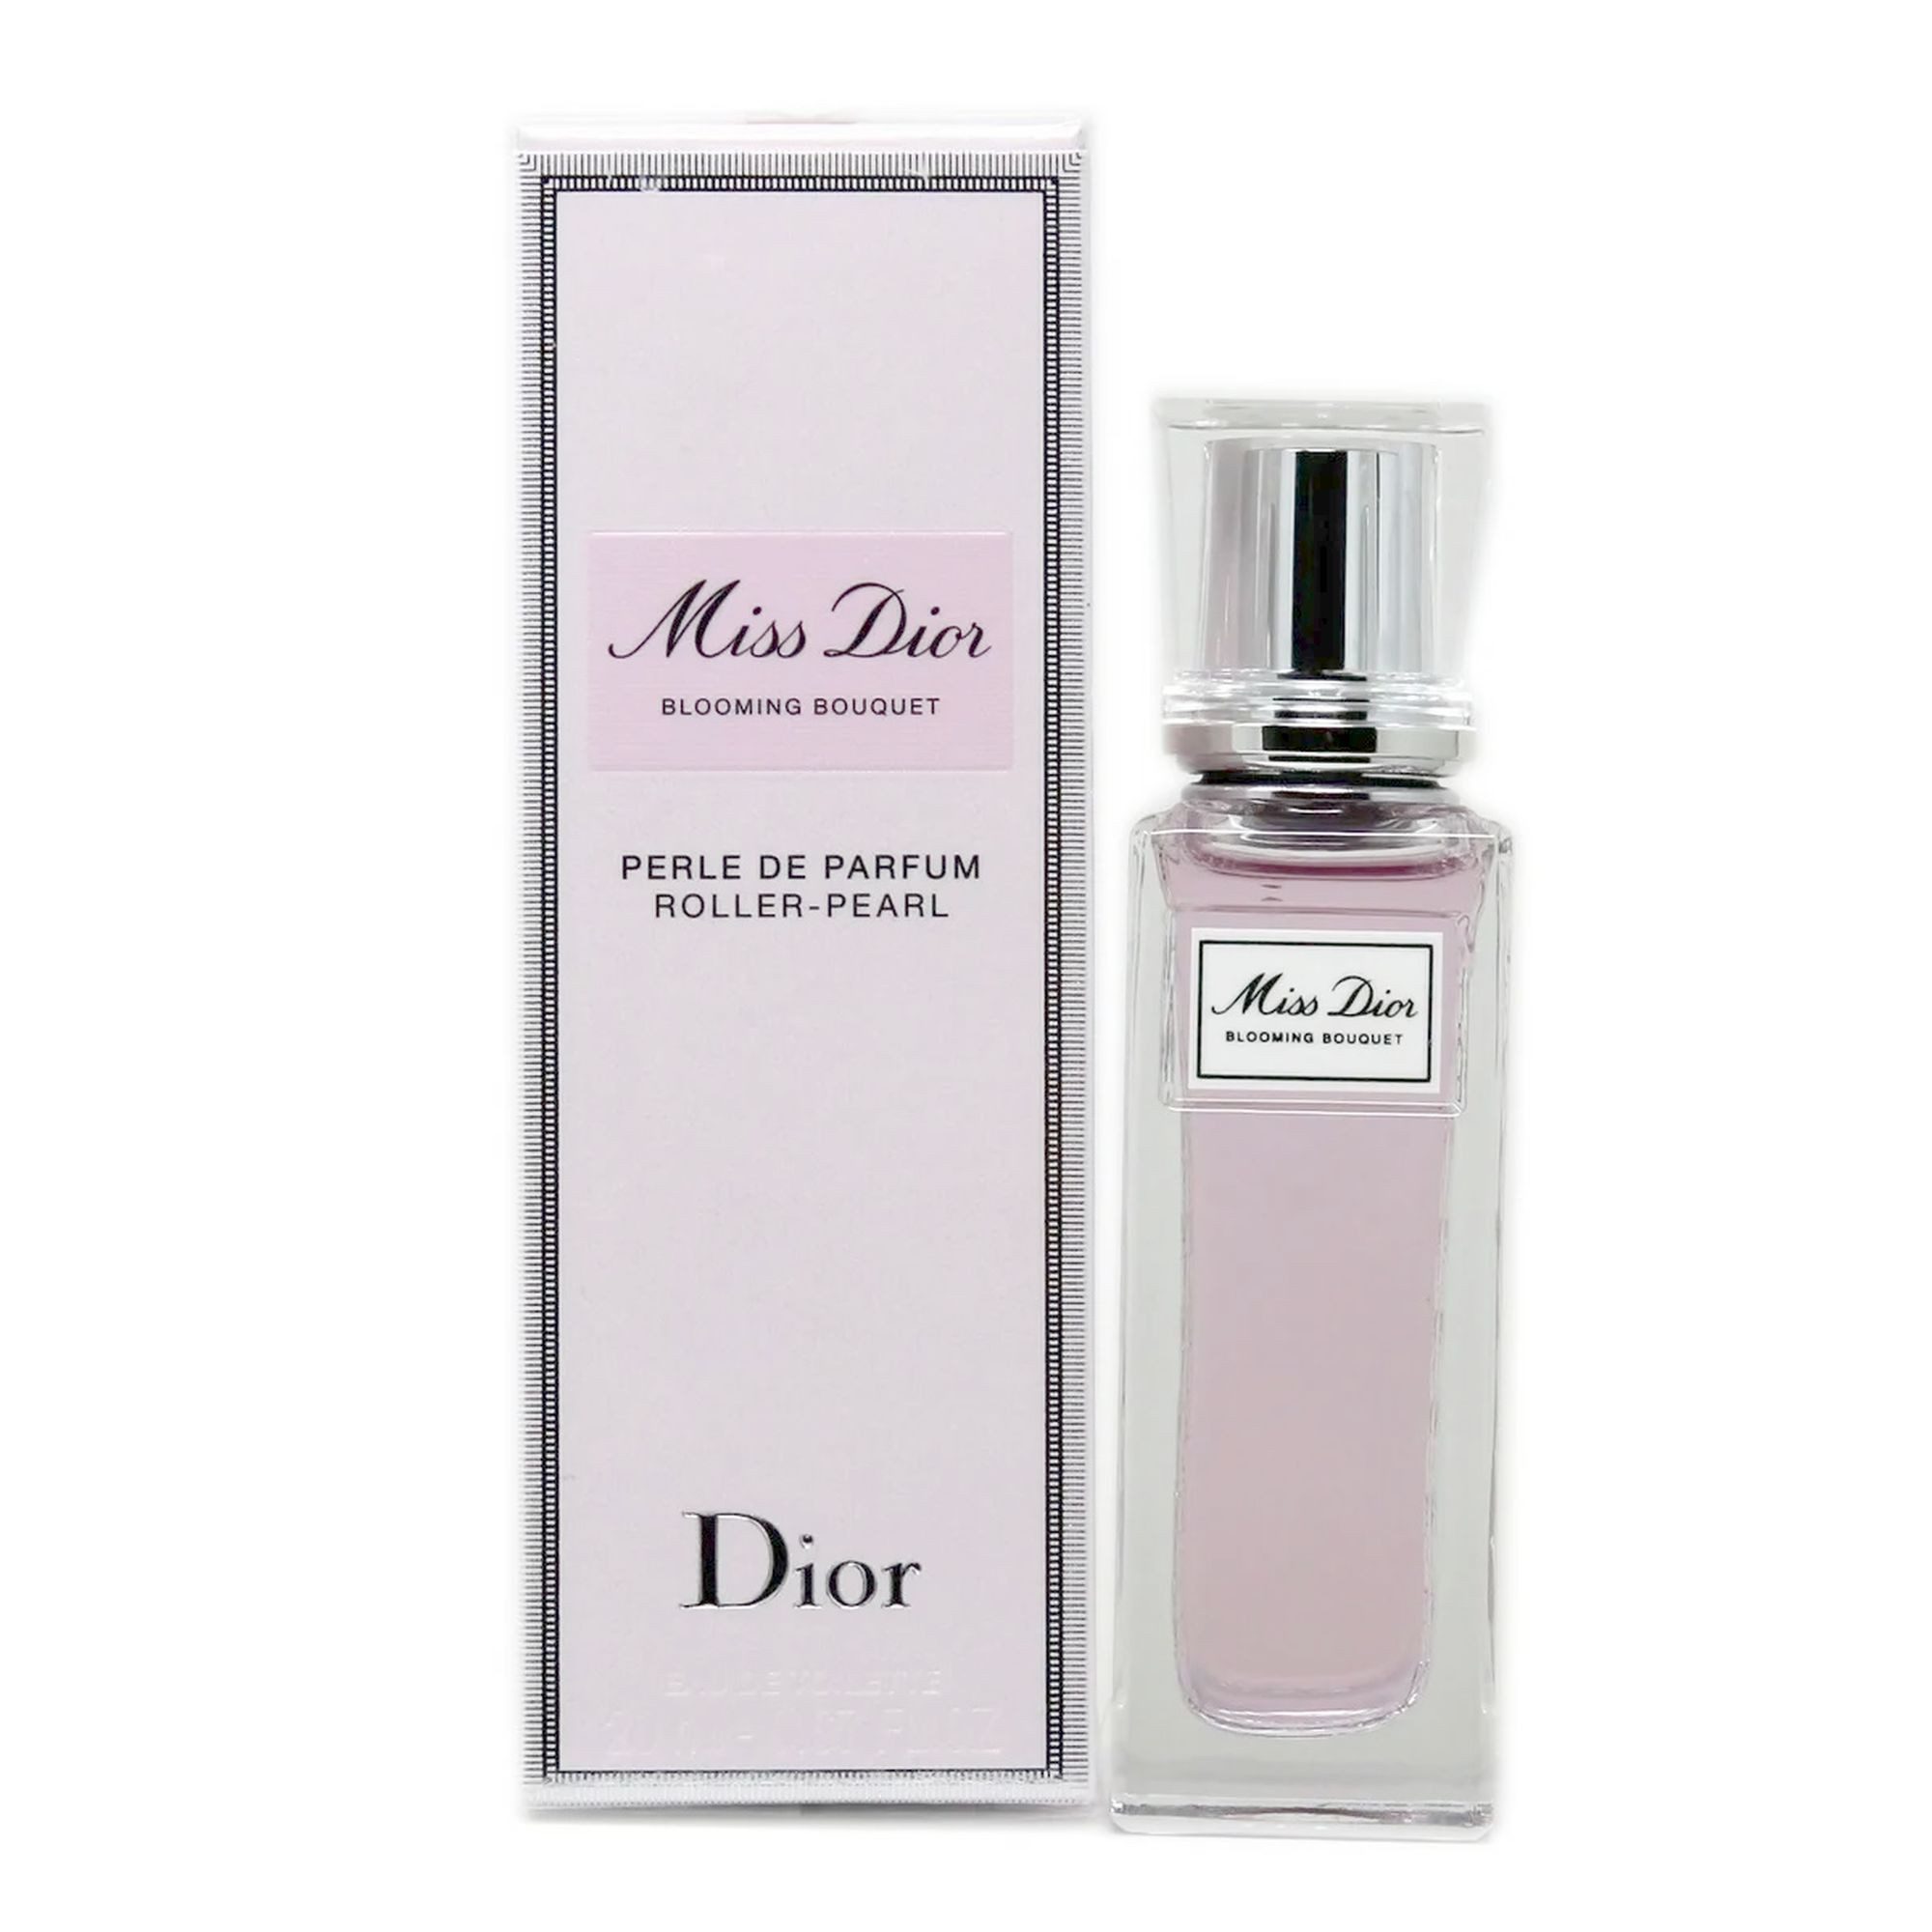 Dior Eau de Toilette Miss Dior Blooming Bouquet Roller Pearl